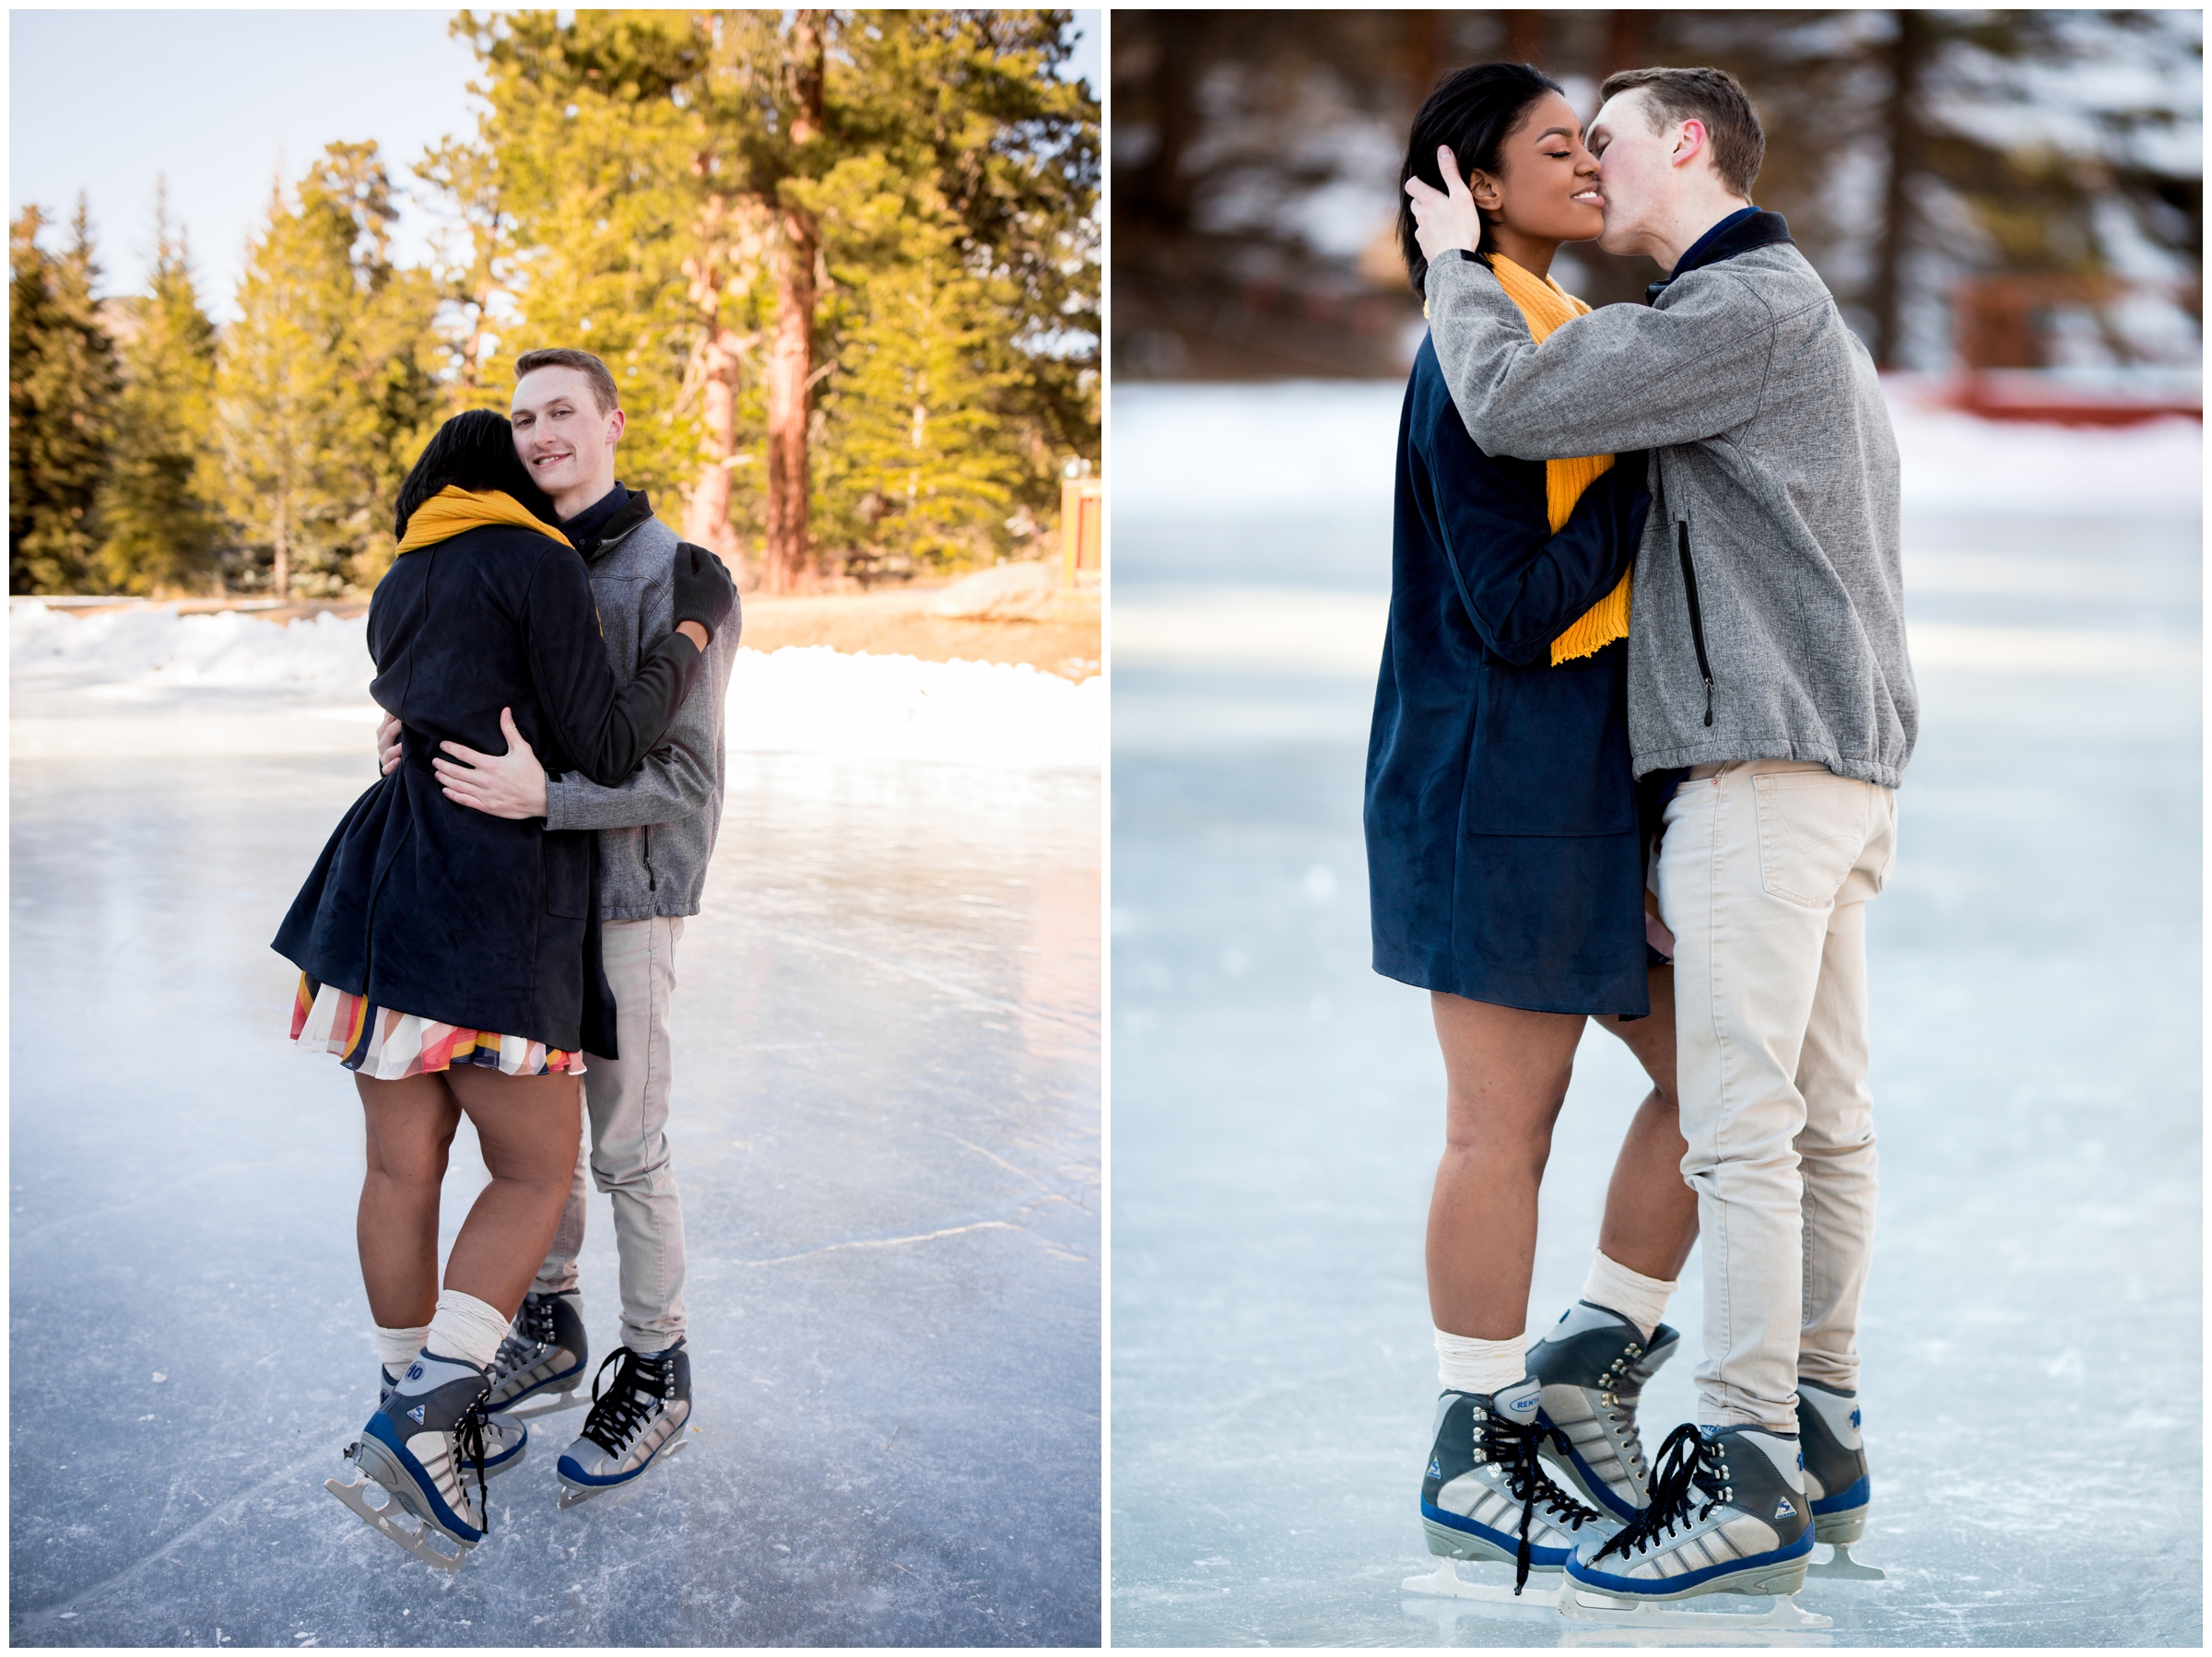 Colorado winter engagement photography inspiration at Dorsey Lake Estes Park 